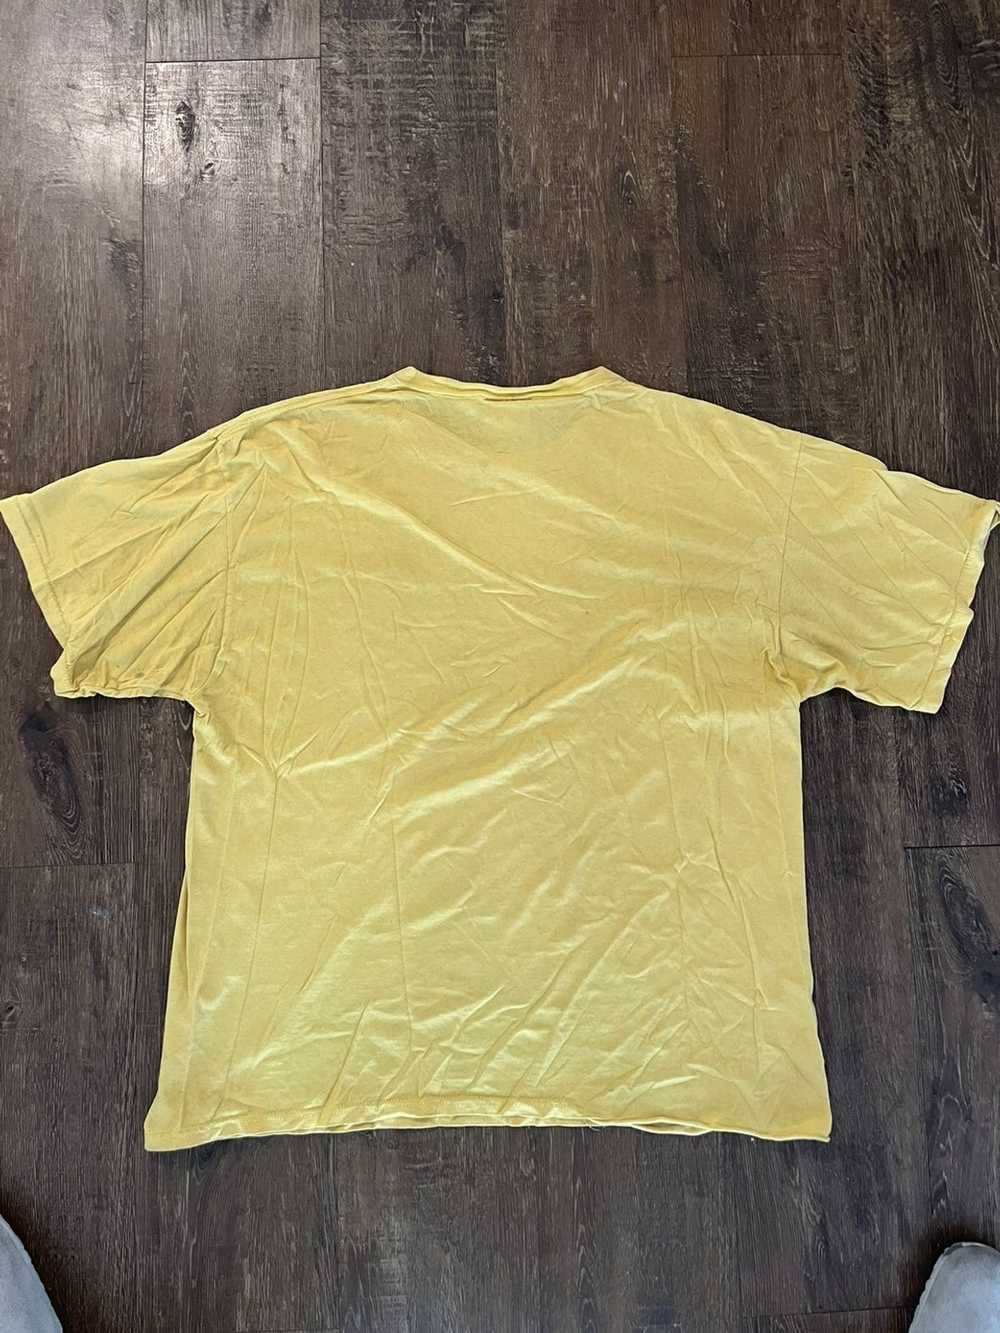 Nike × Vintage Basic Yellow Nike T-Shirt - image 2